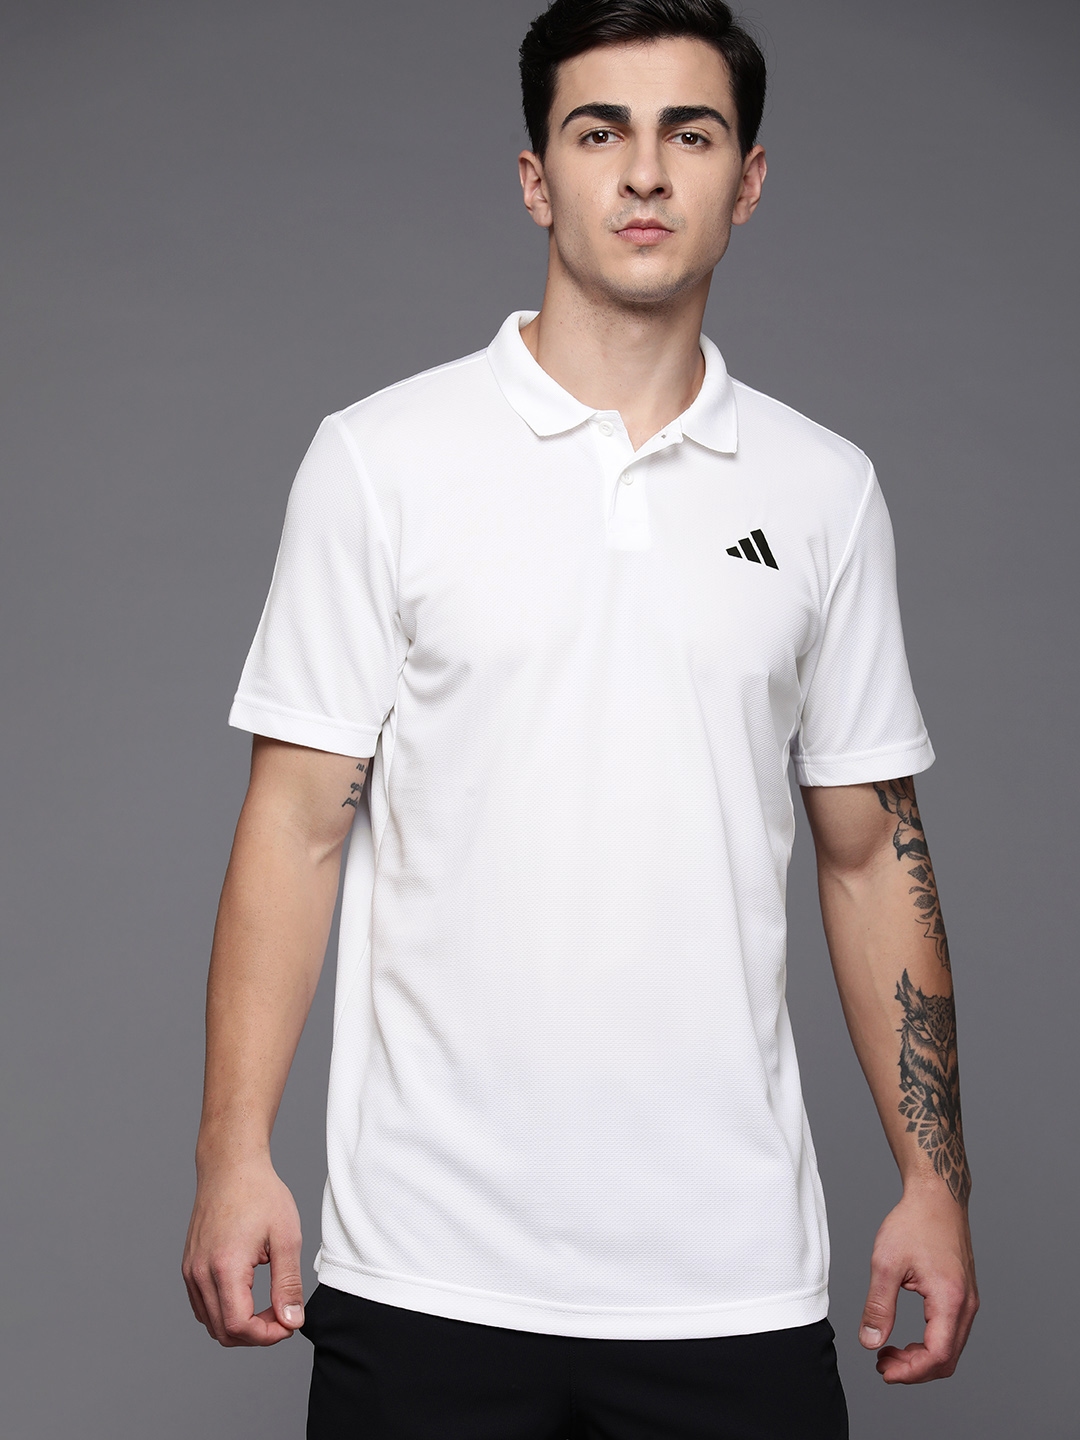 Camiseta Tommy Hilfiger Center Chest Stripe Tee Branco - FIRST